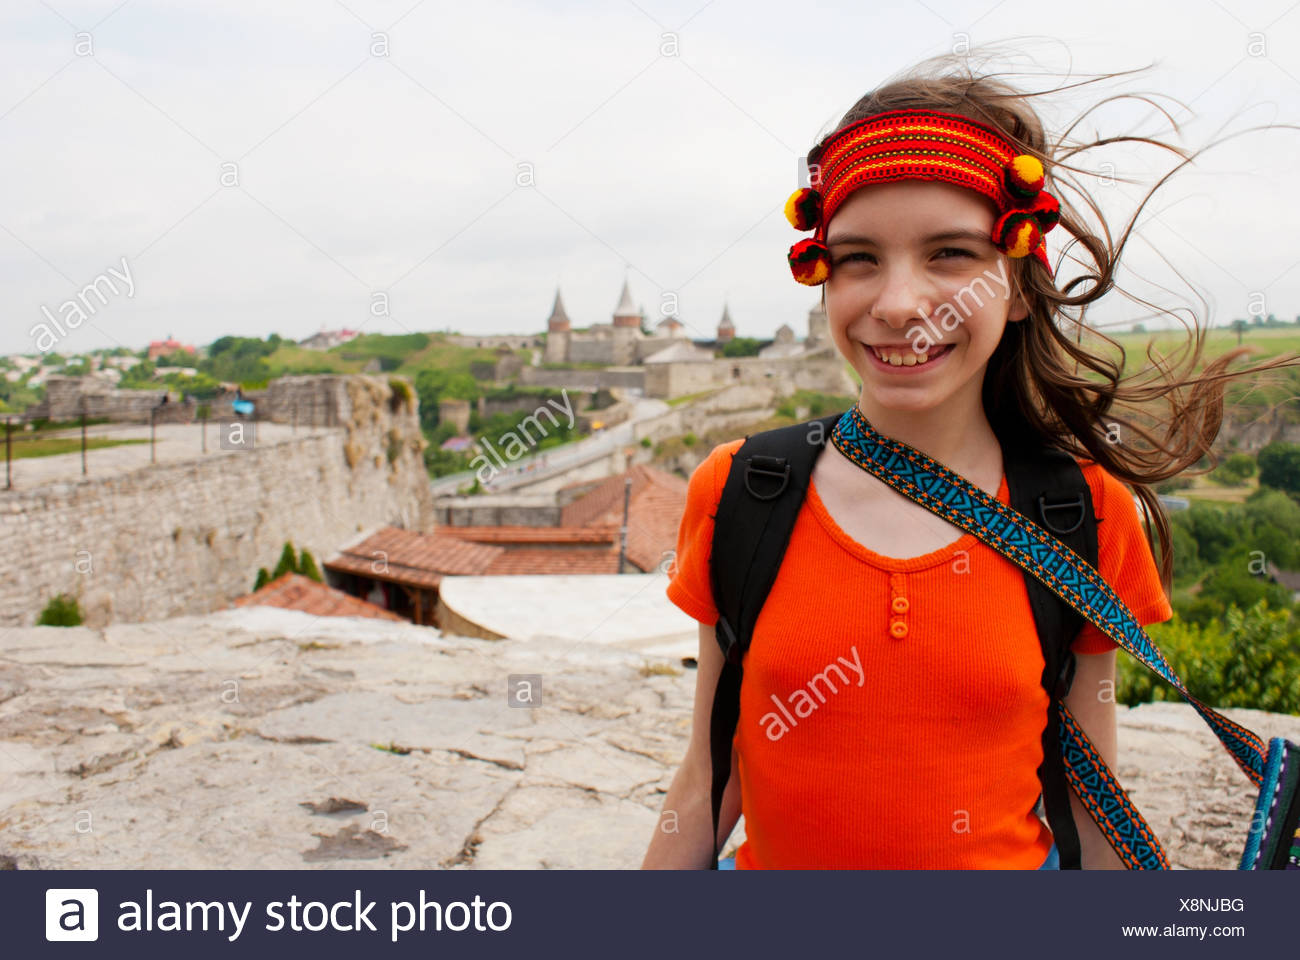 Ukraine young girls